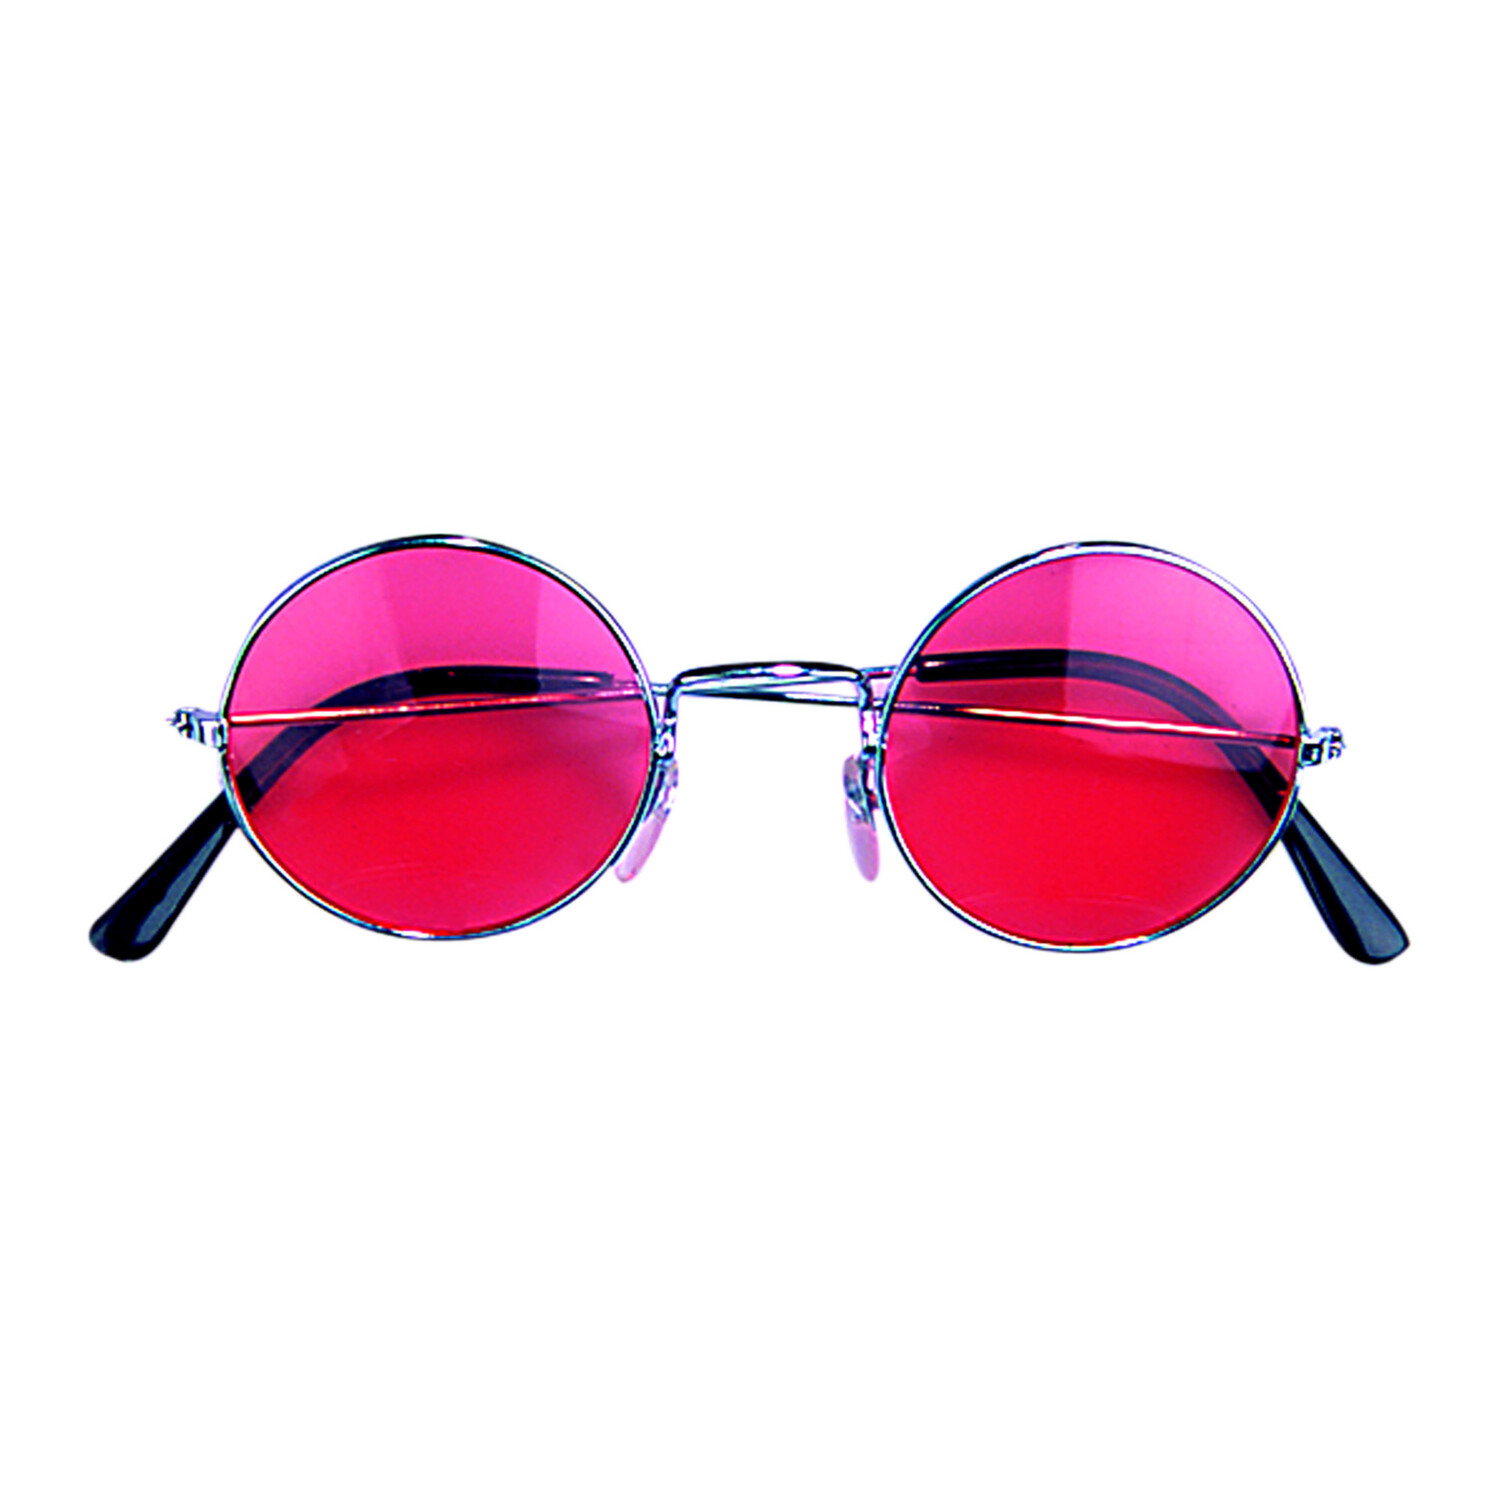 ≫ Gafas Hippie Roja - ⭐ Miles de Fiestas ⭐ - 24 H ✓